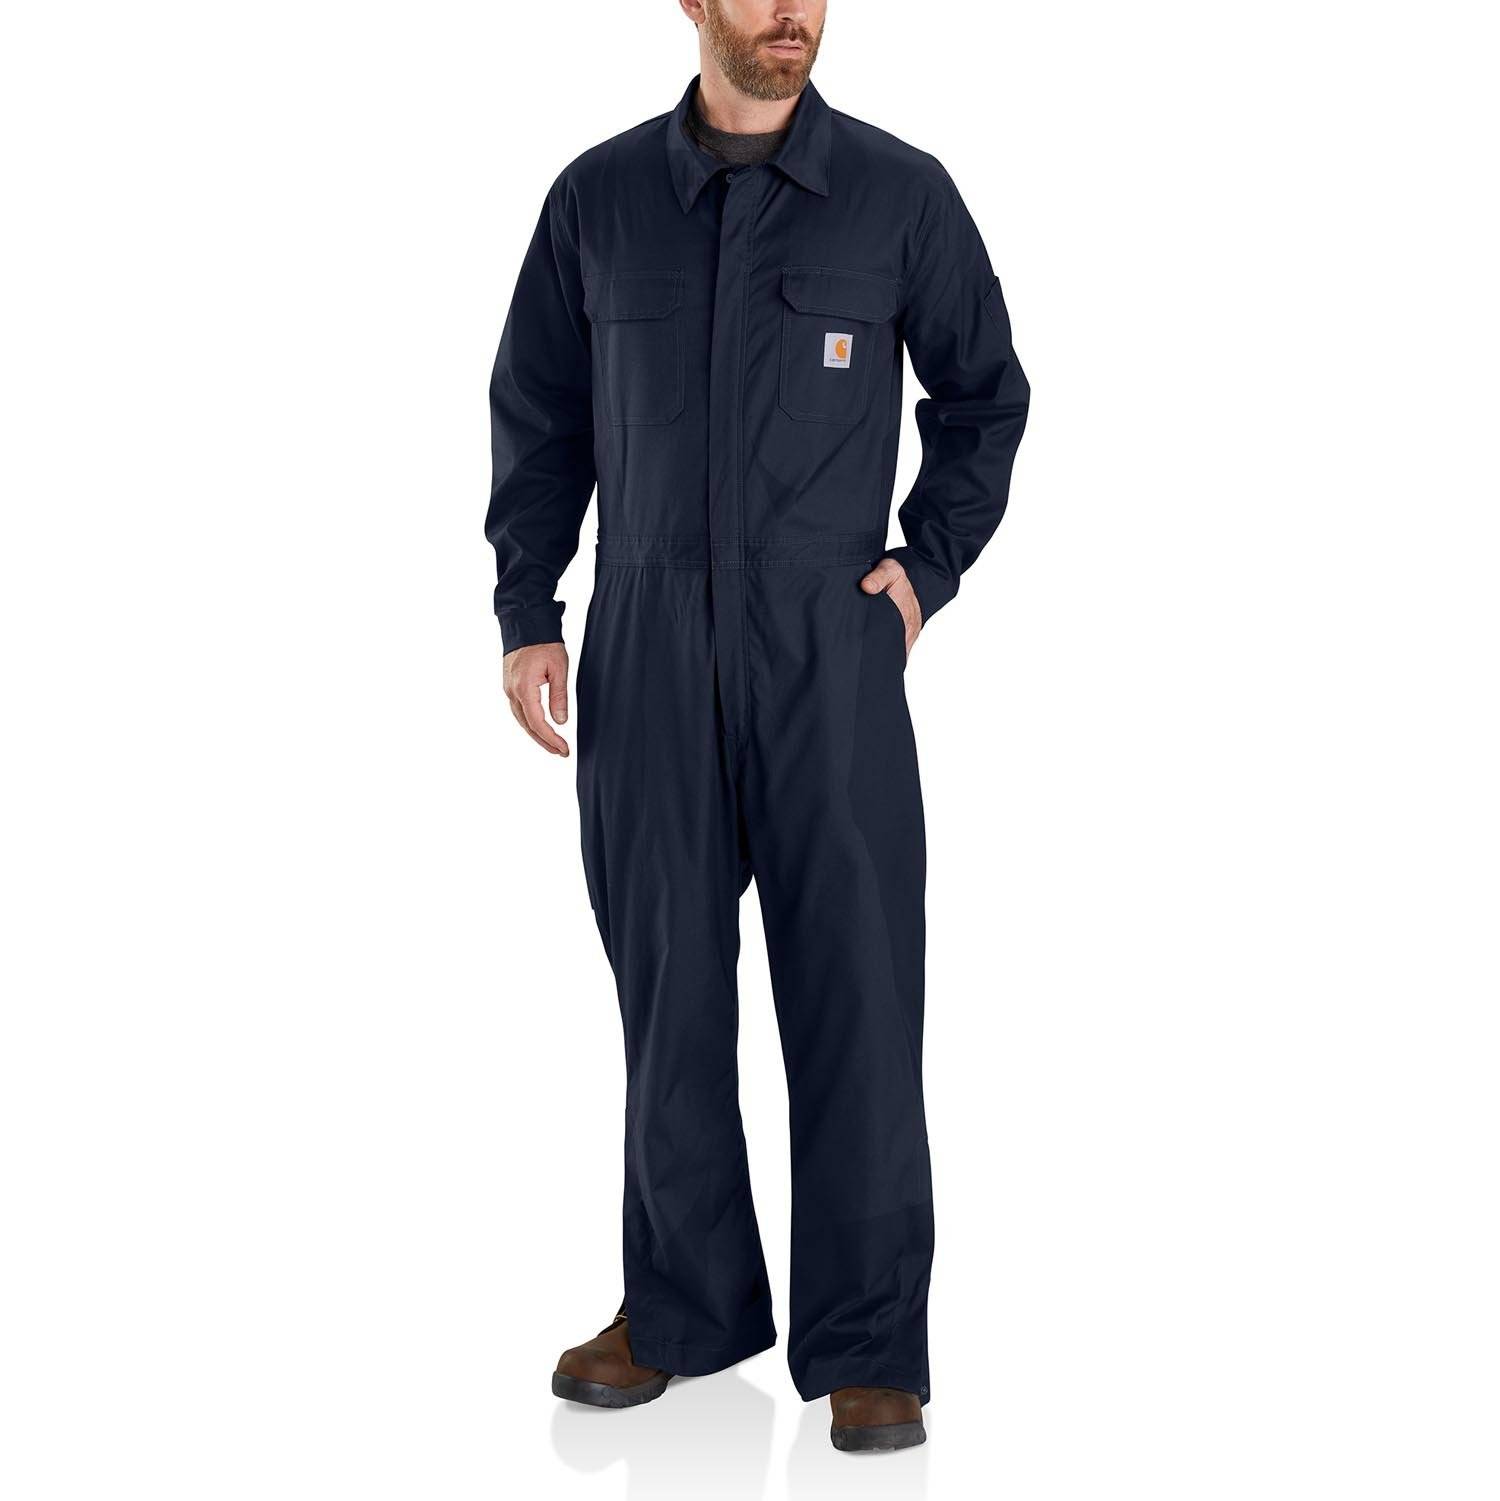 MilSpec Flightsuit Navy Blue